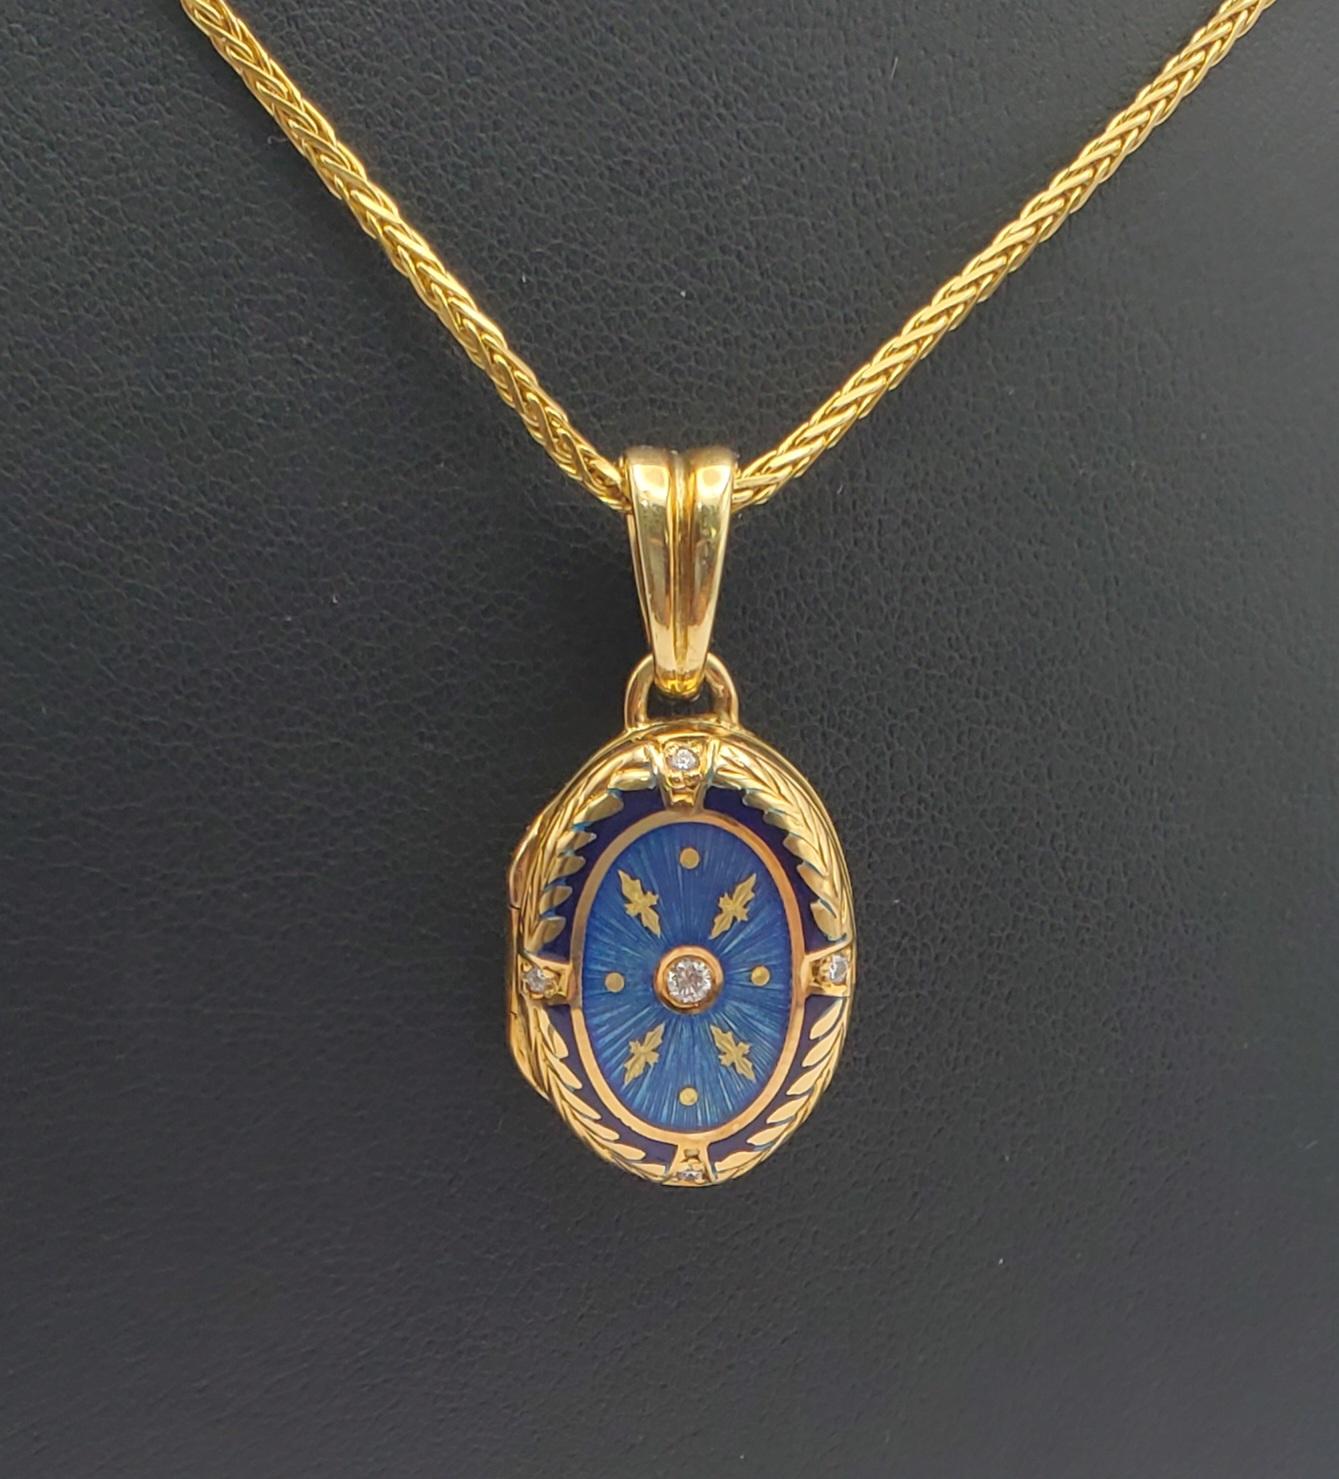 Modern Fabergé 18K Gold Diamond Guilloche Enamel Locket with Box/Certificate For Sale